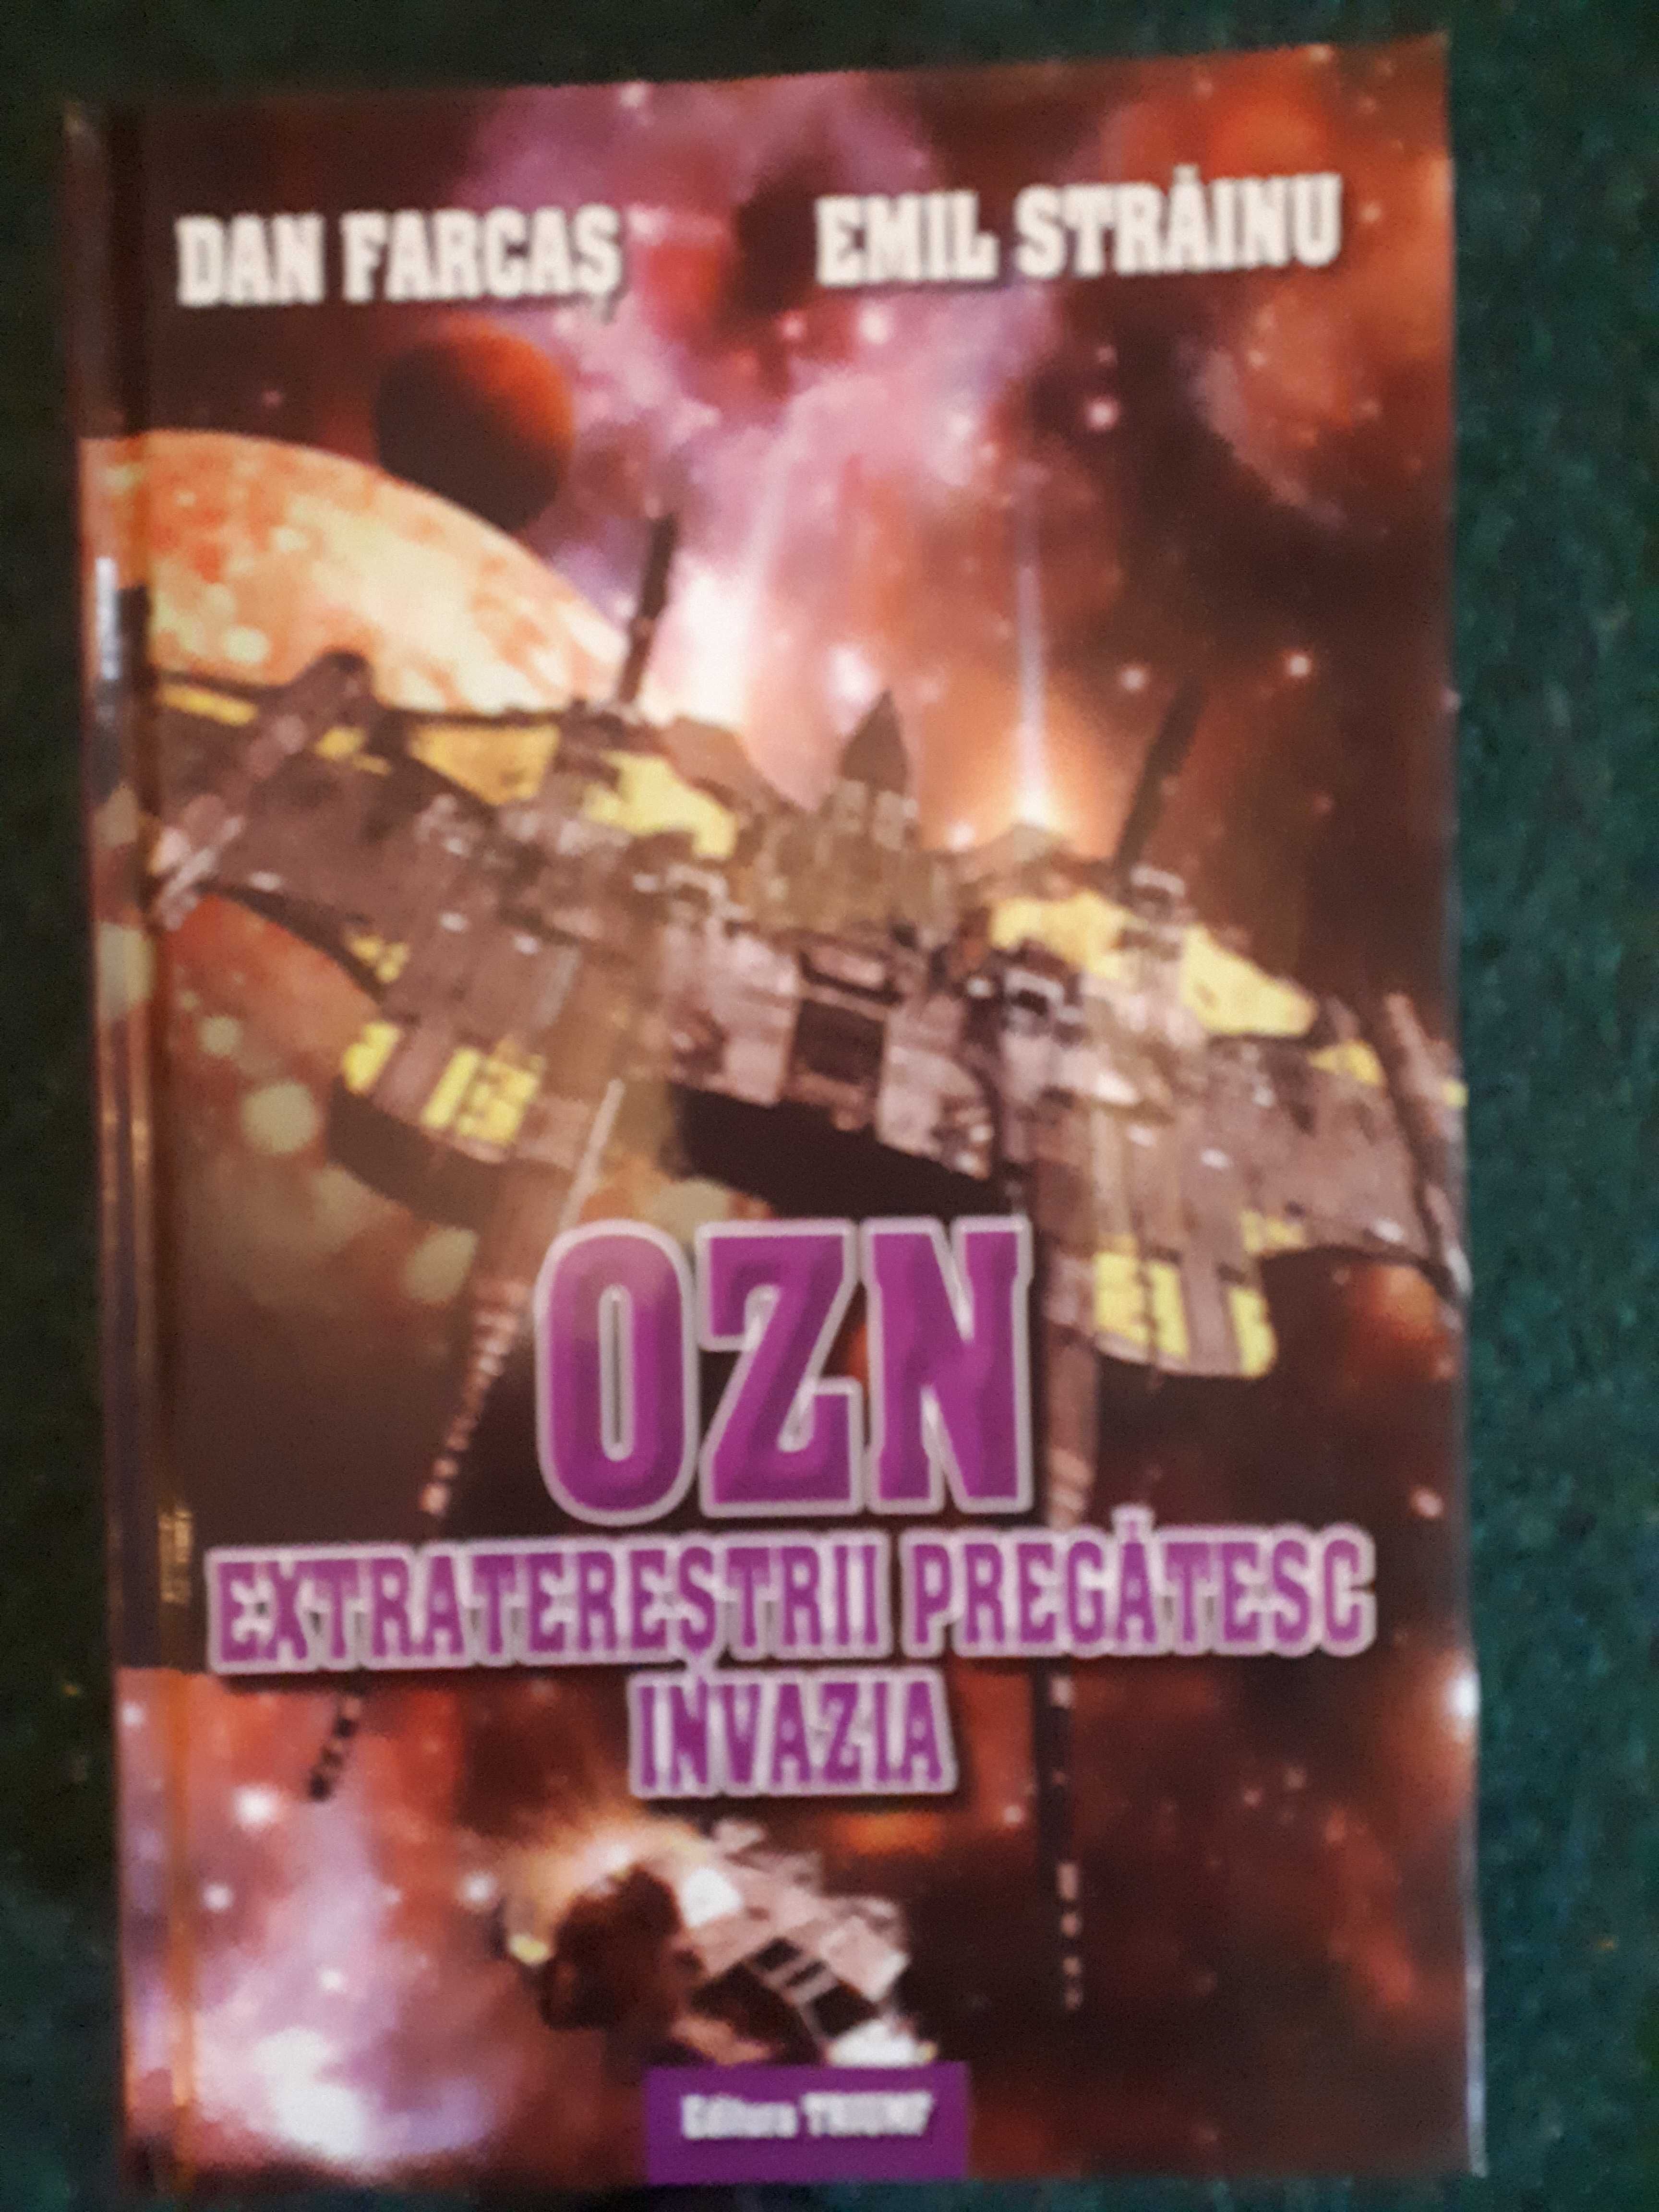 OZN, Extratereștrii pregatesc invazia,  Dan Farcas, Emil Strainu